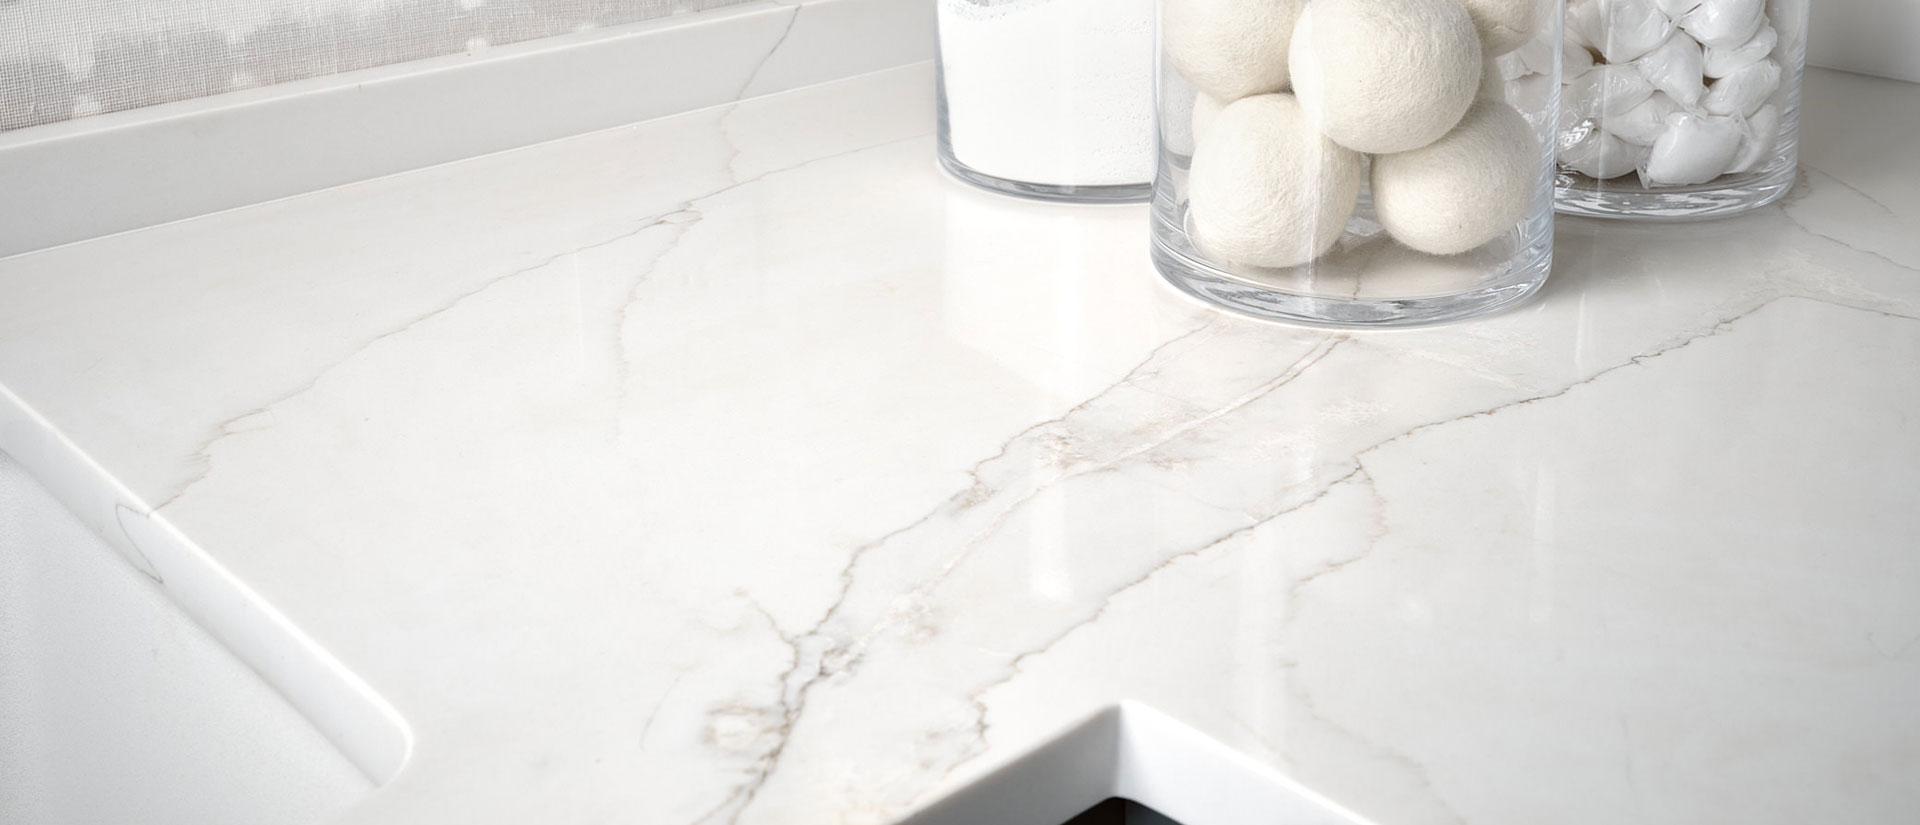 Calacatta Izaro quartz countertop in a luxurious kitchen with marble backsplash